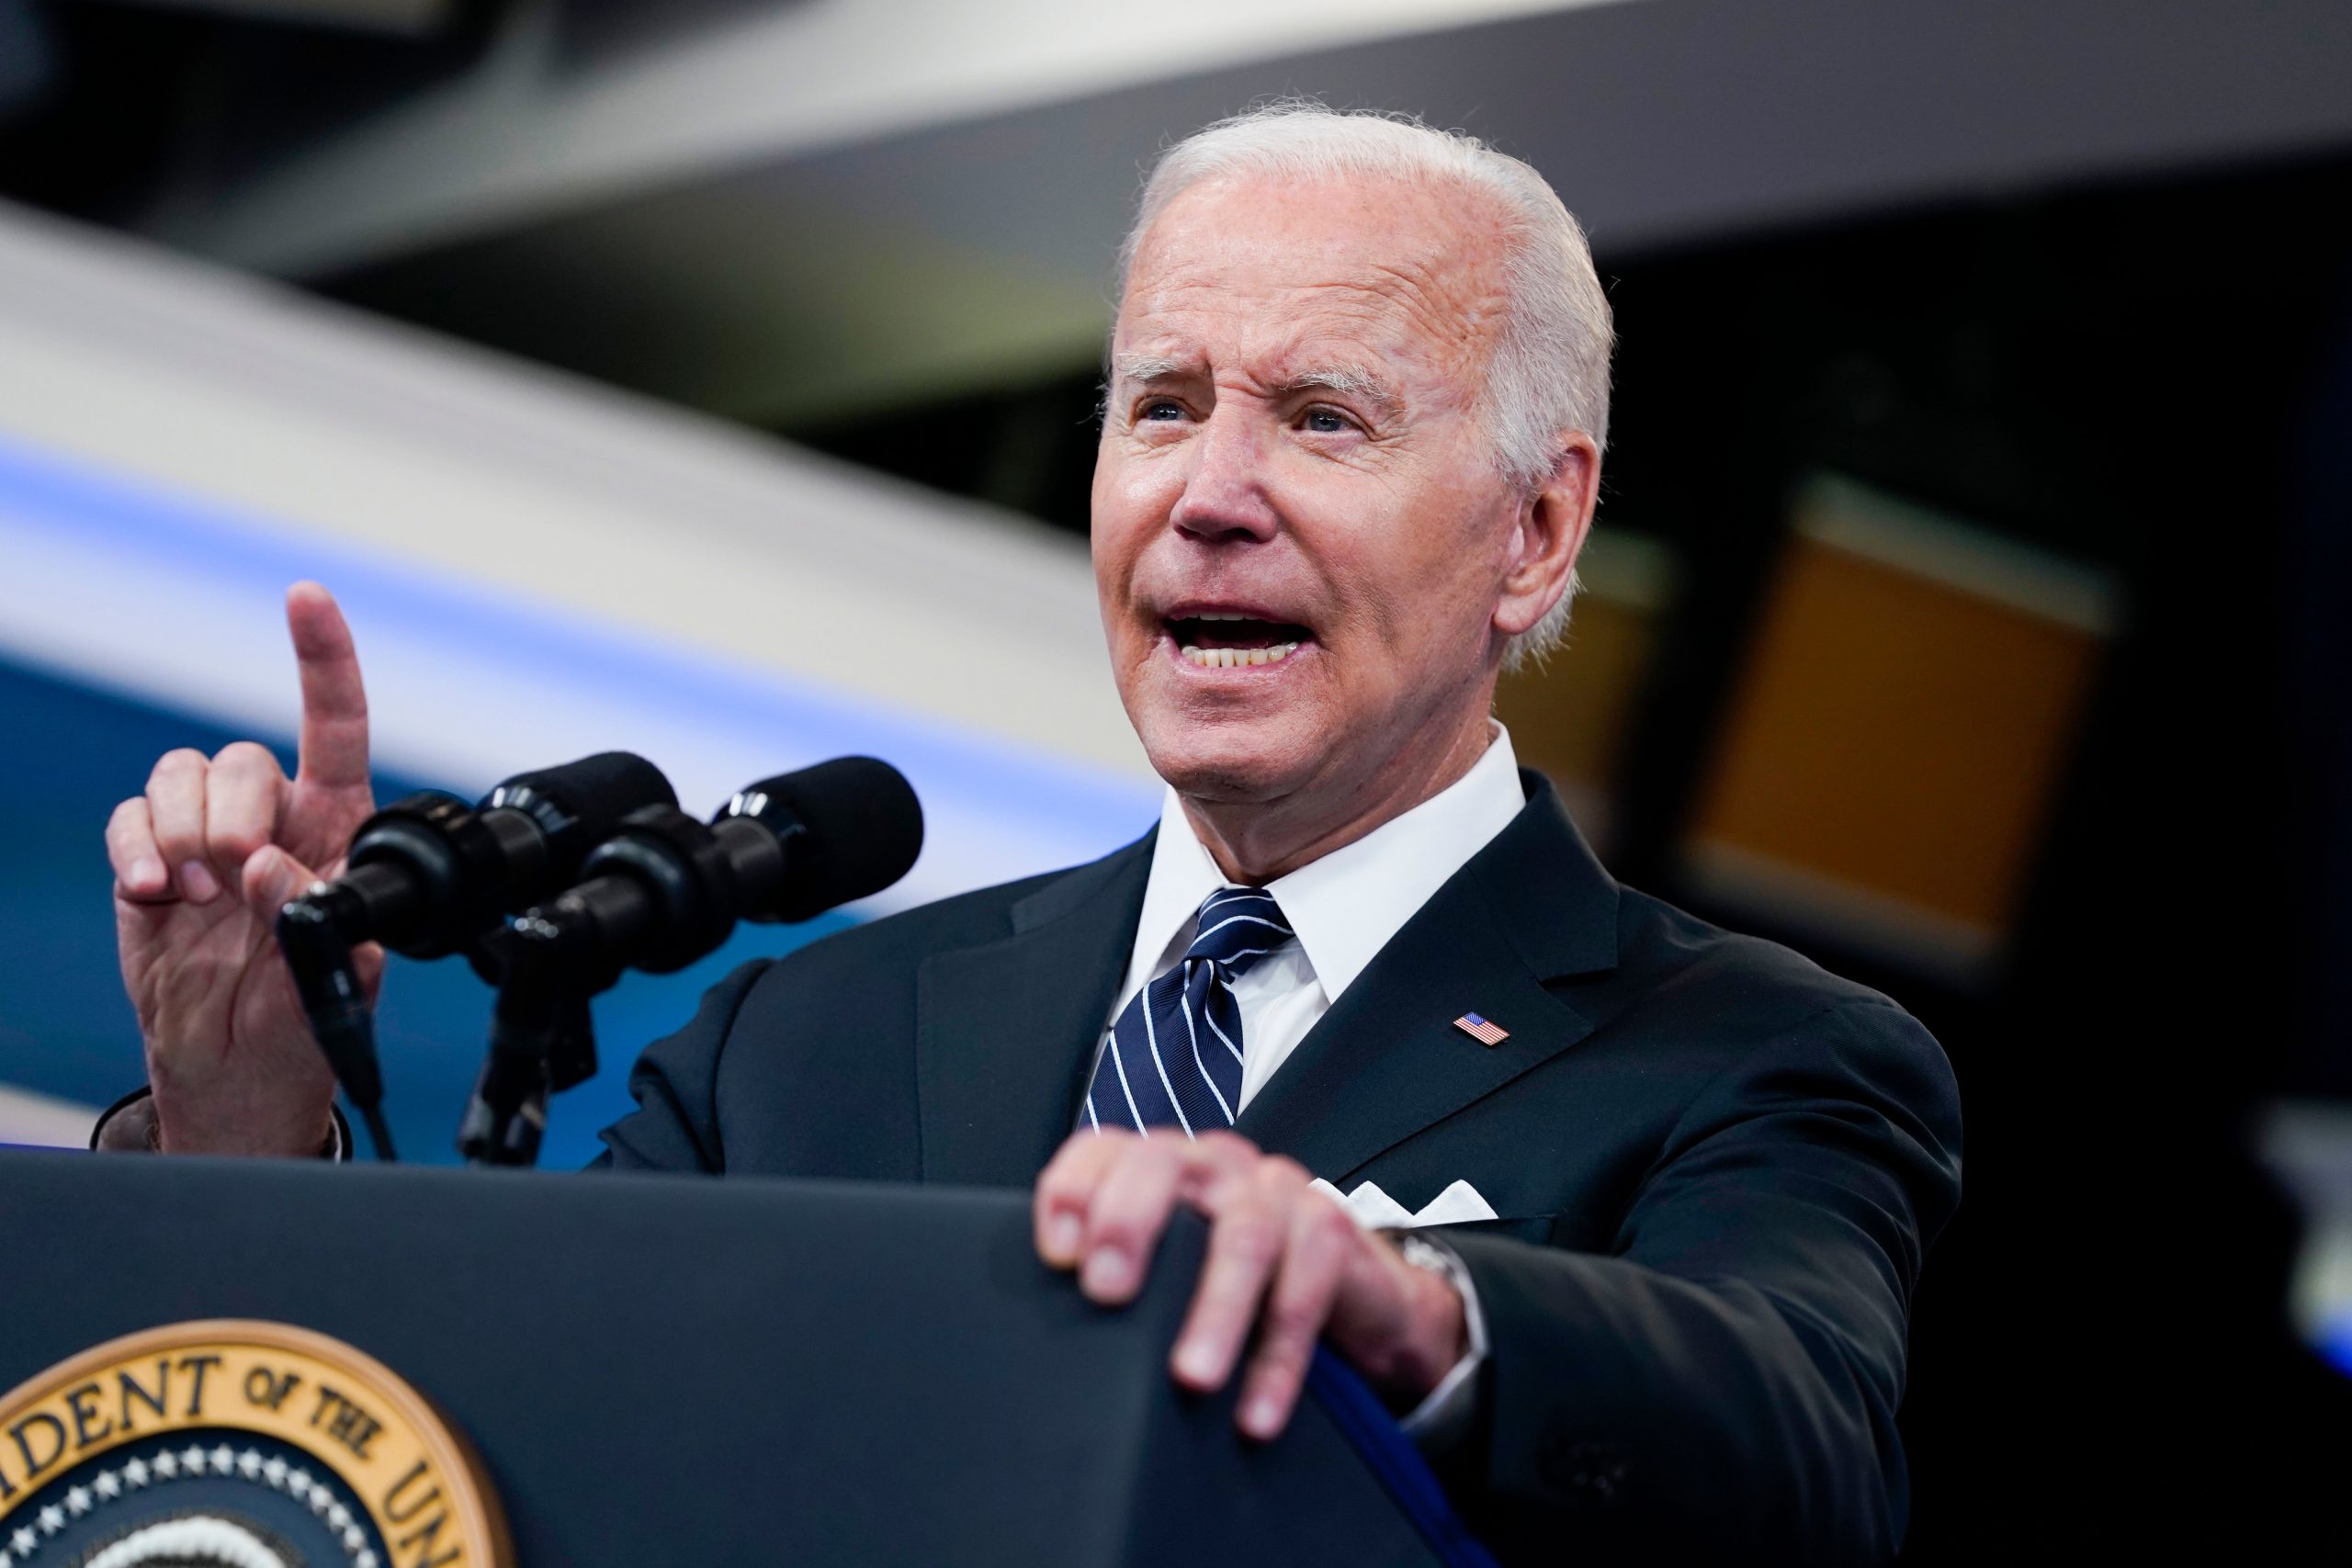 As Roe v. Wade ends, Joe Biden steps up to ensure abortion rights